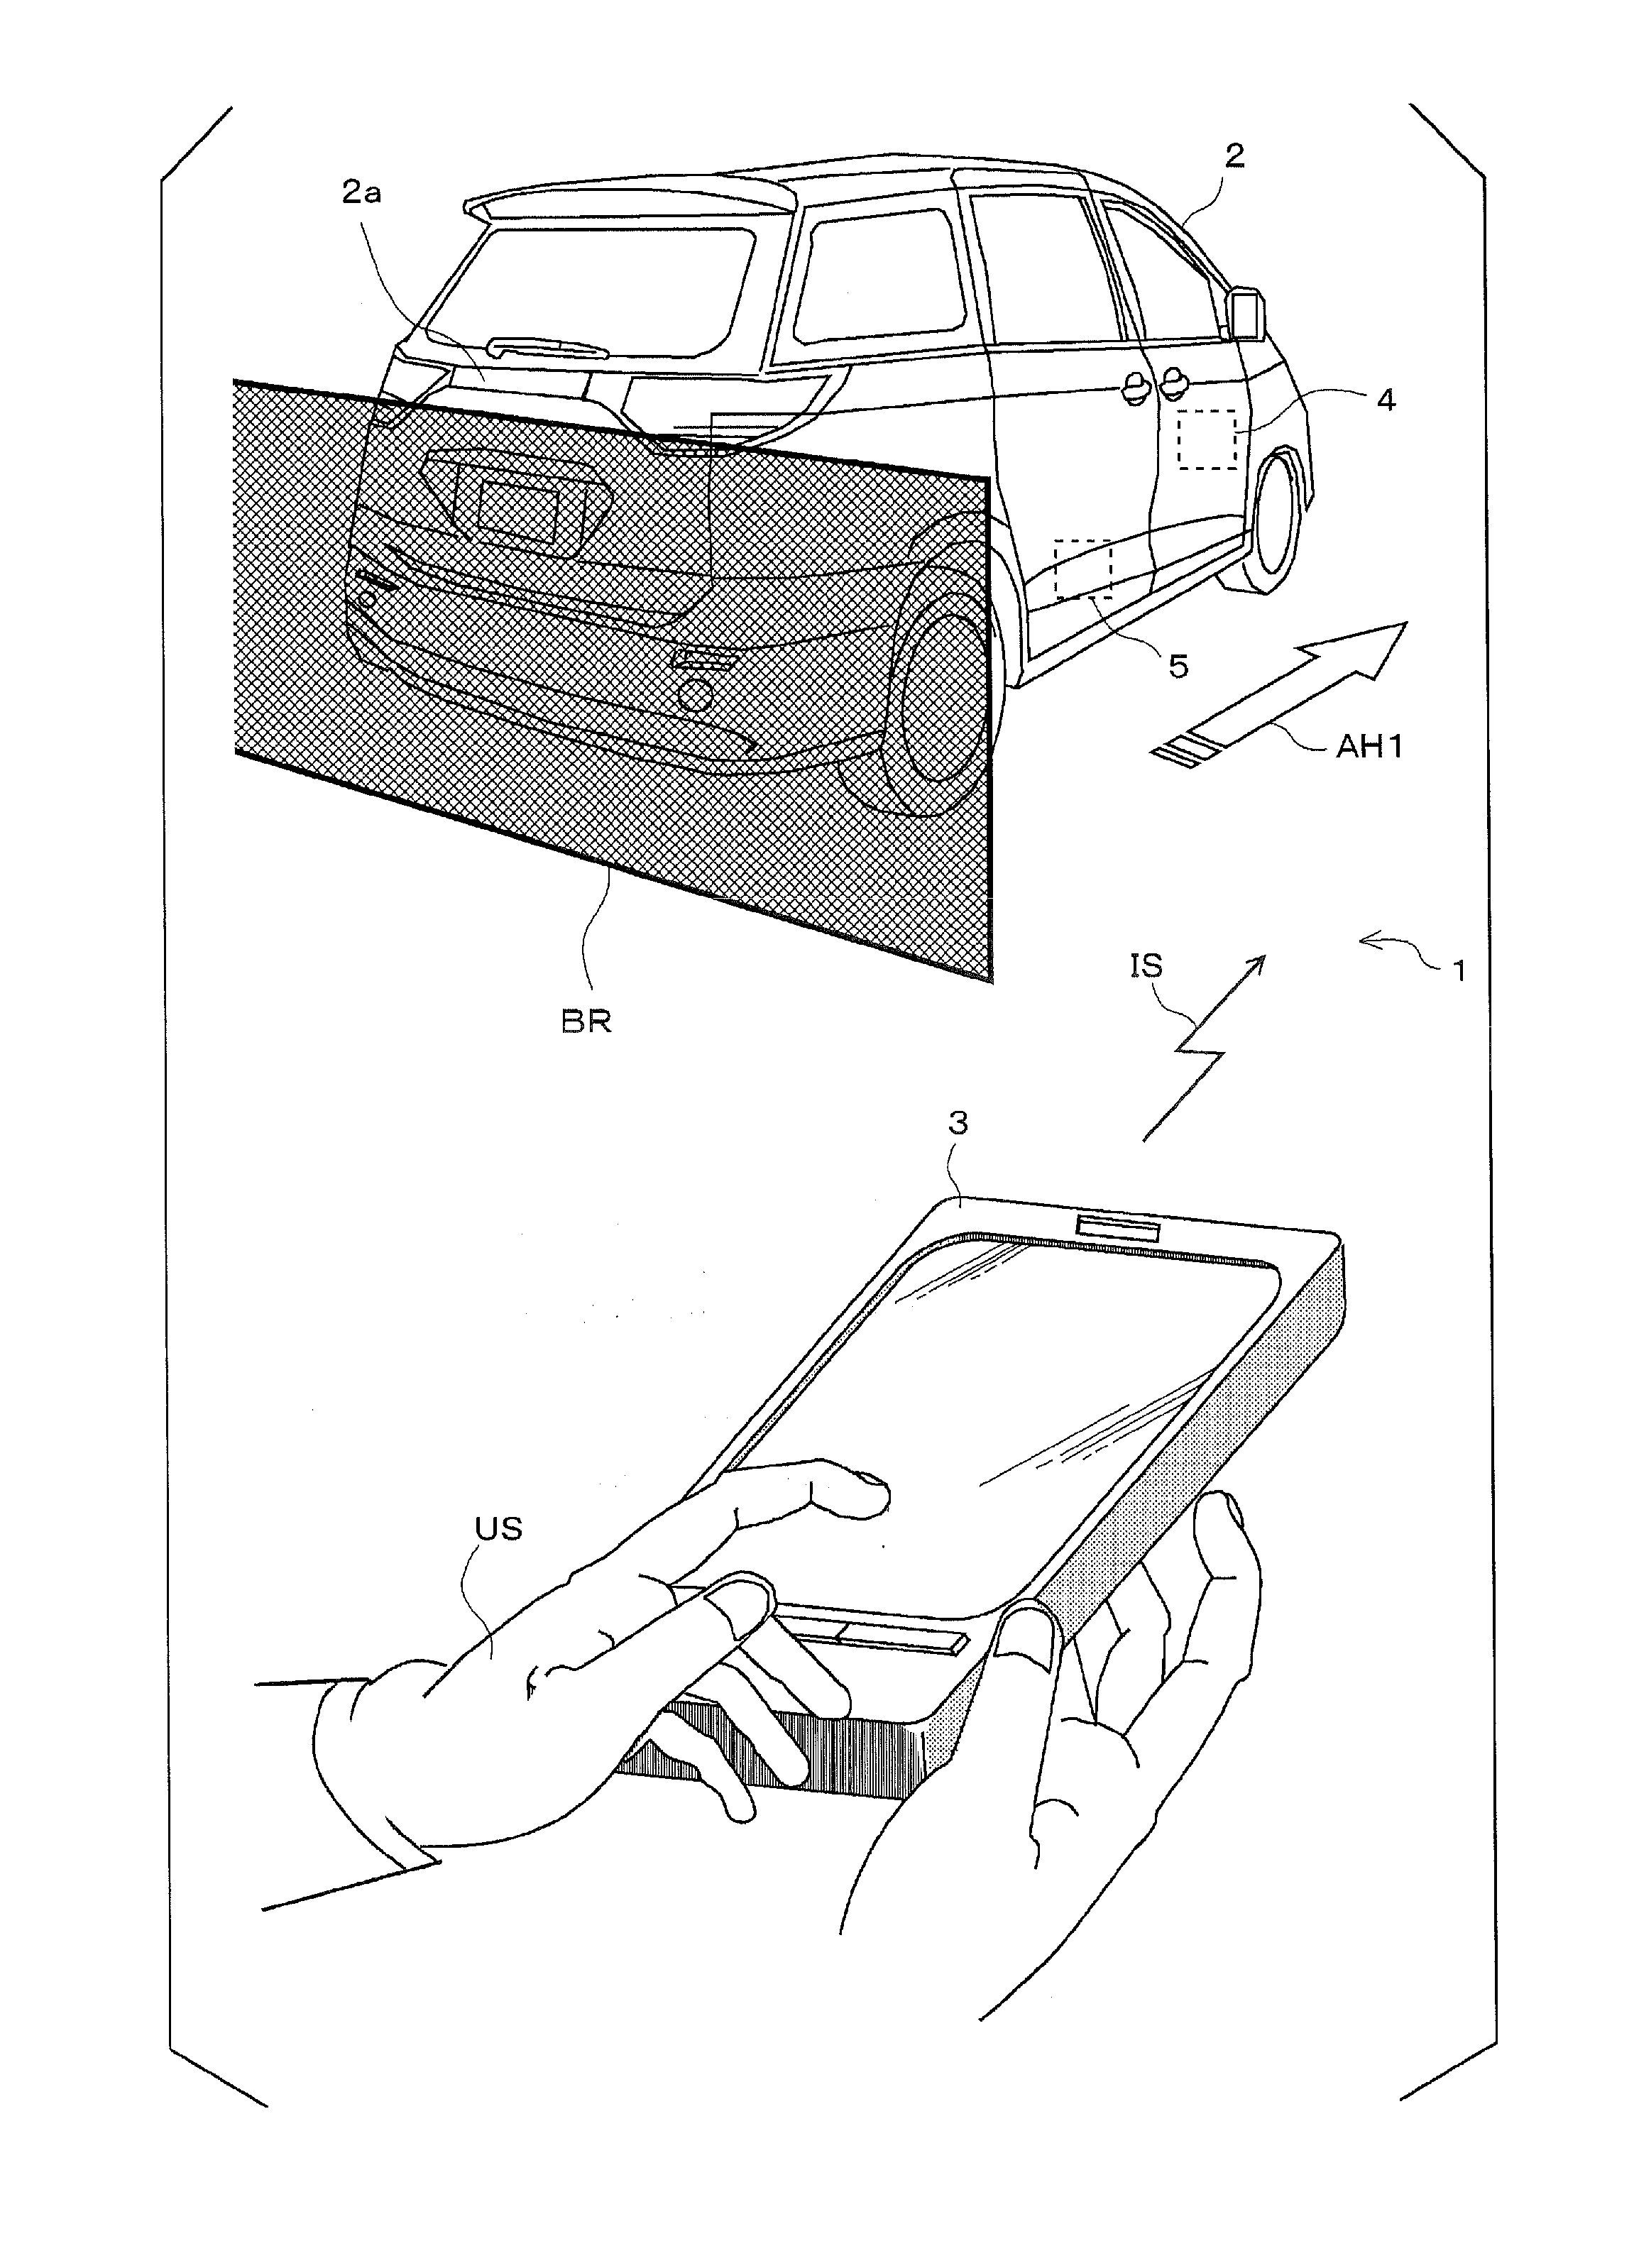 Vehicle apparatus